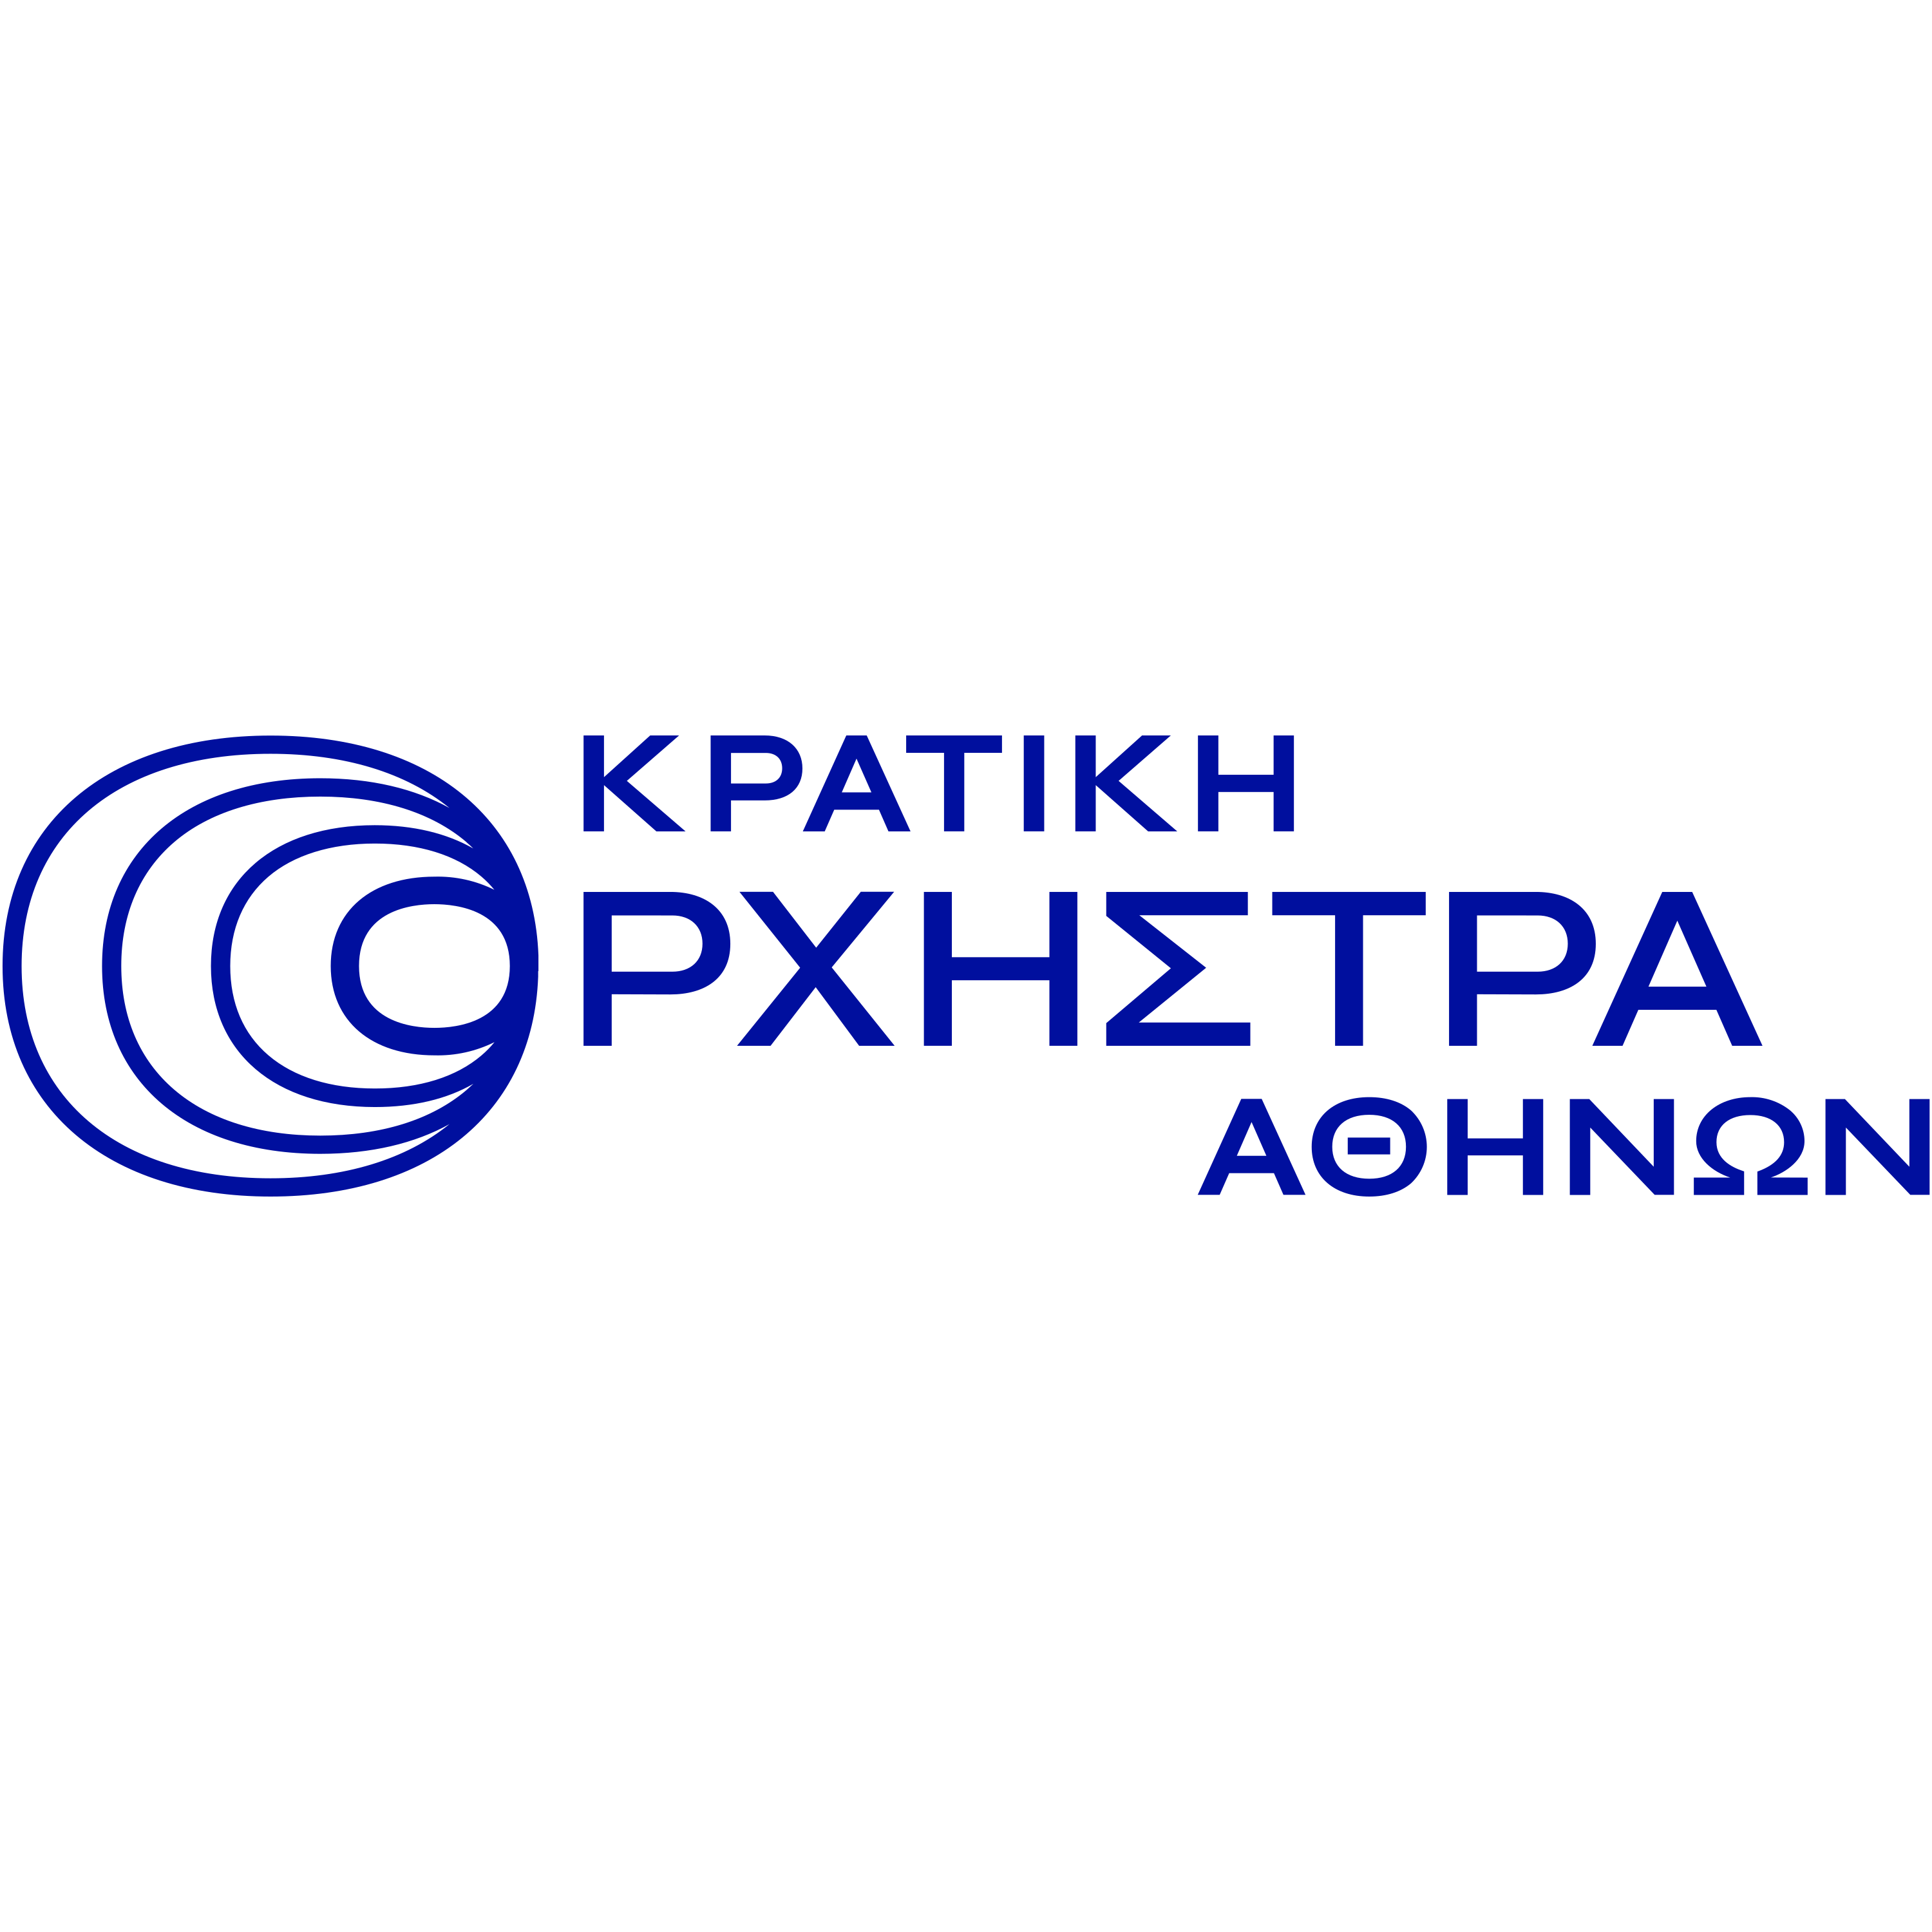 Athens State Orchestra Logo  Transparent Image